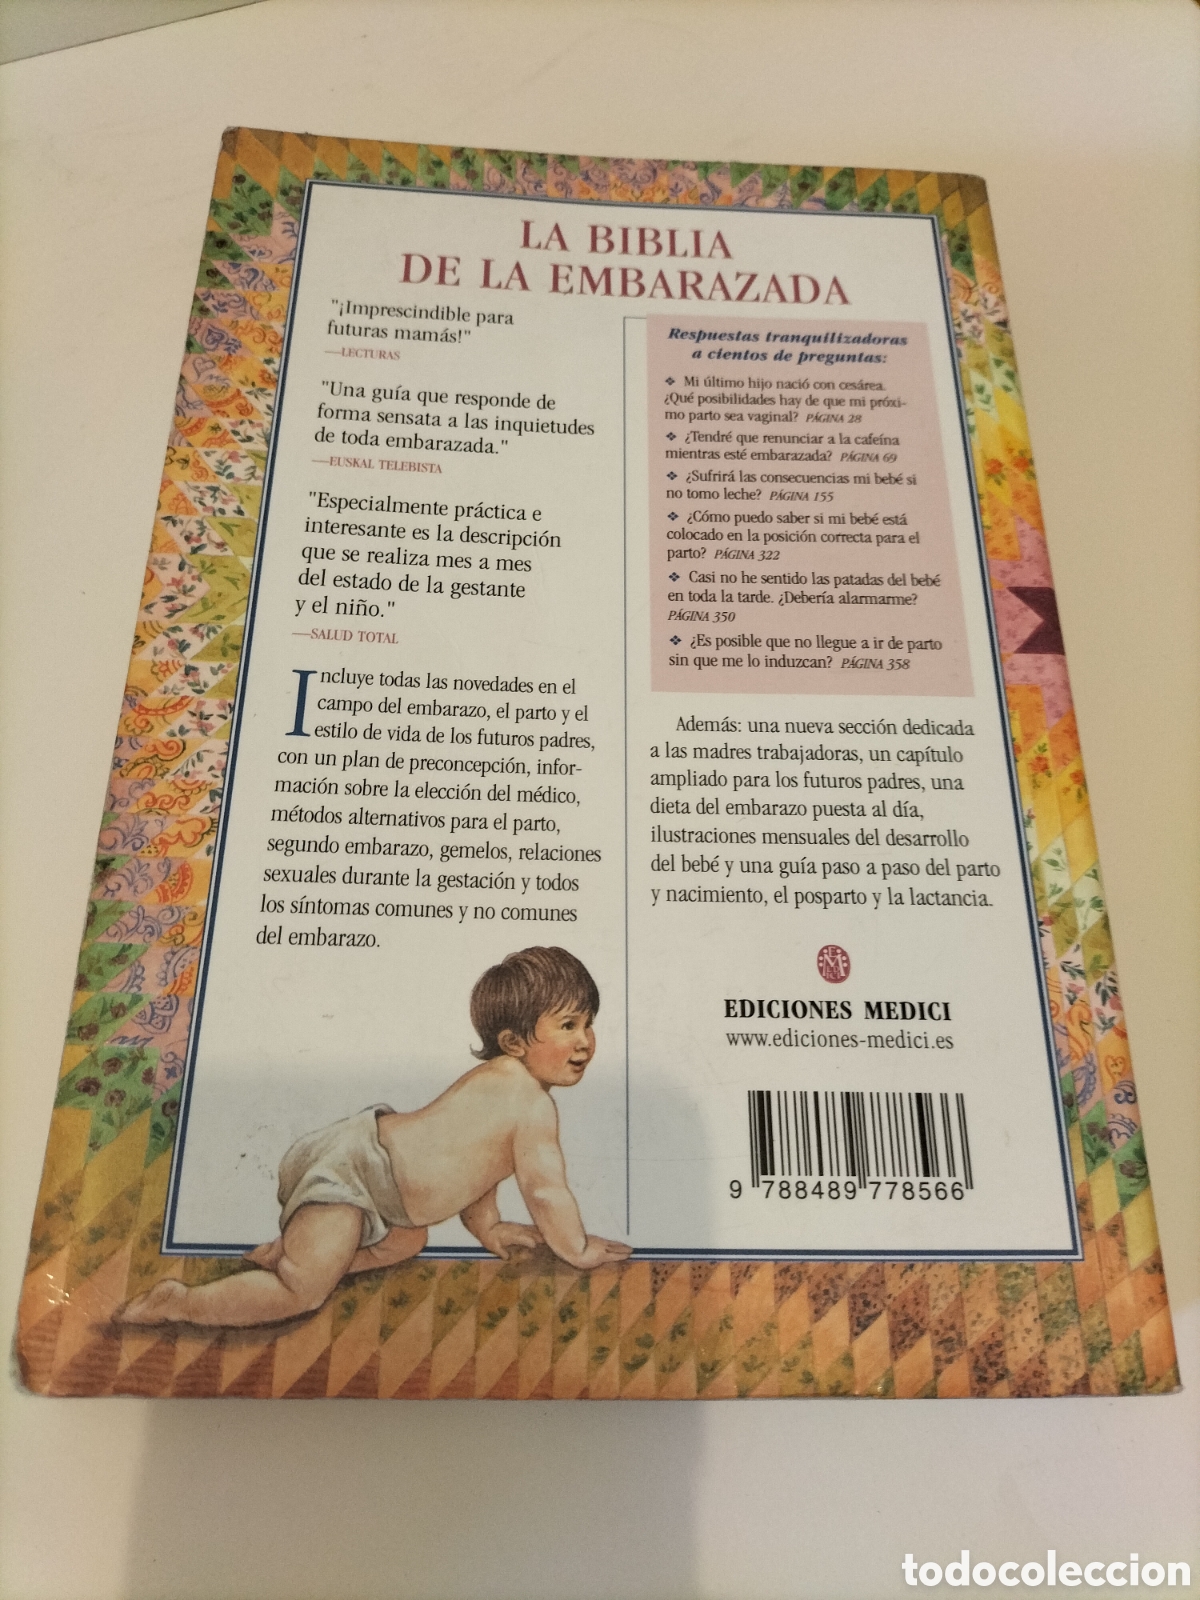 Que esperar cuando se esta esperando (Spanish Edition)